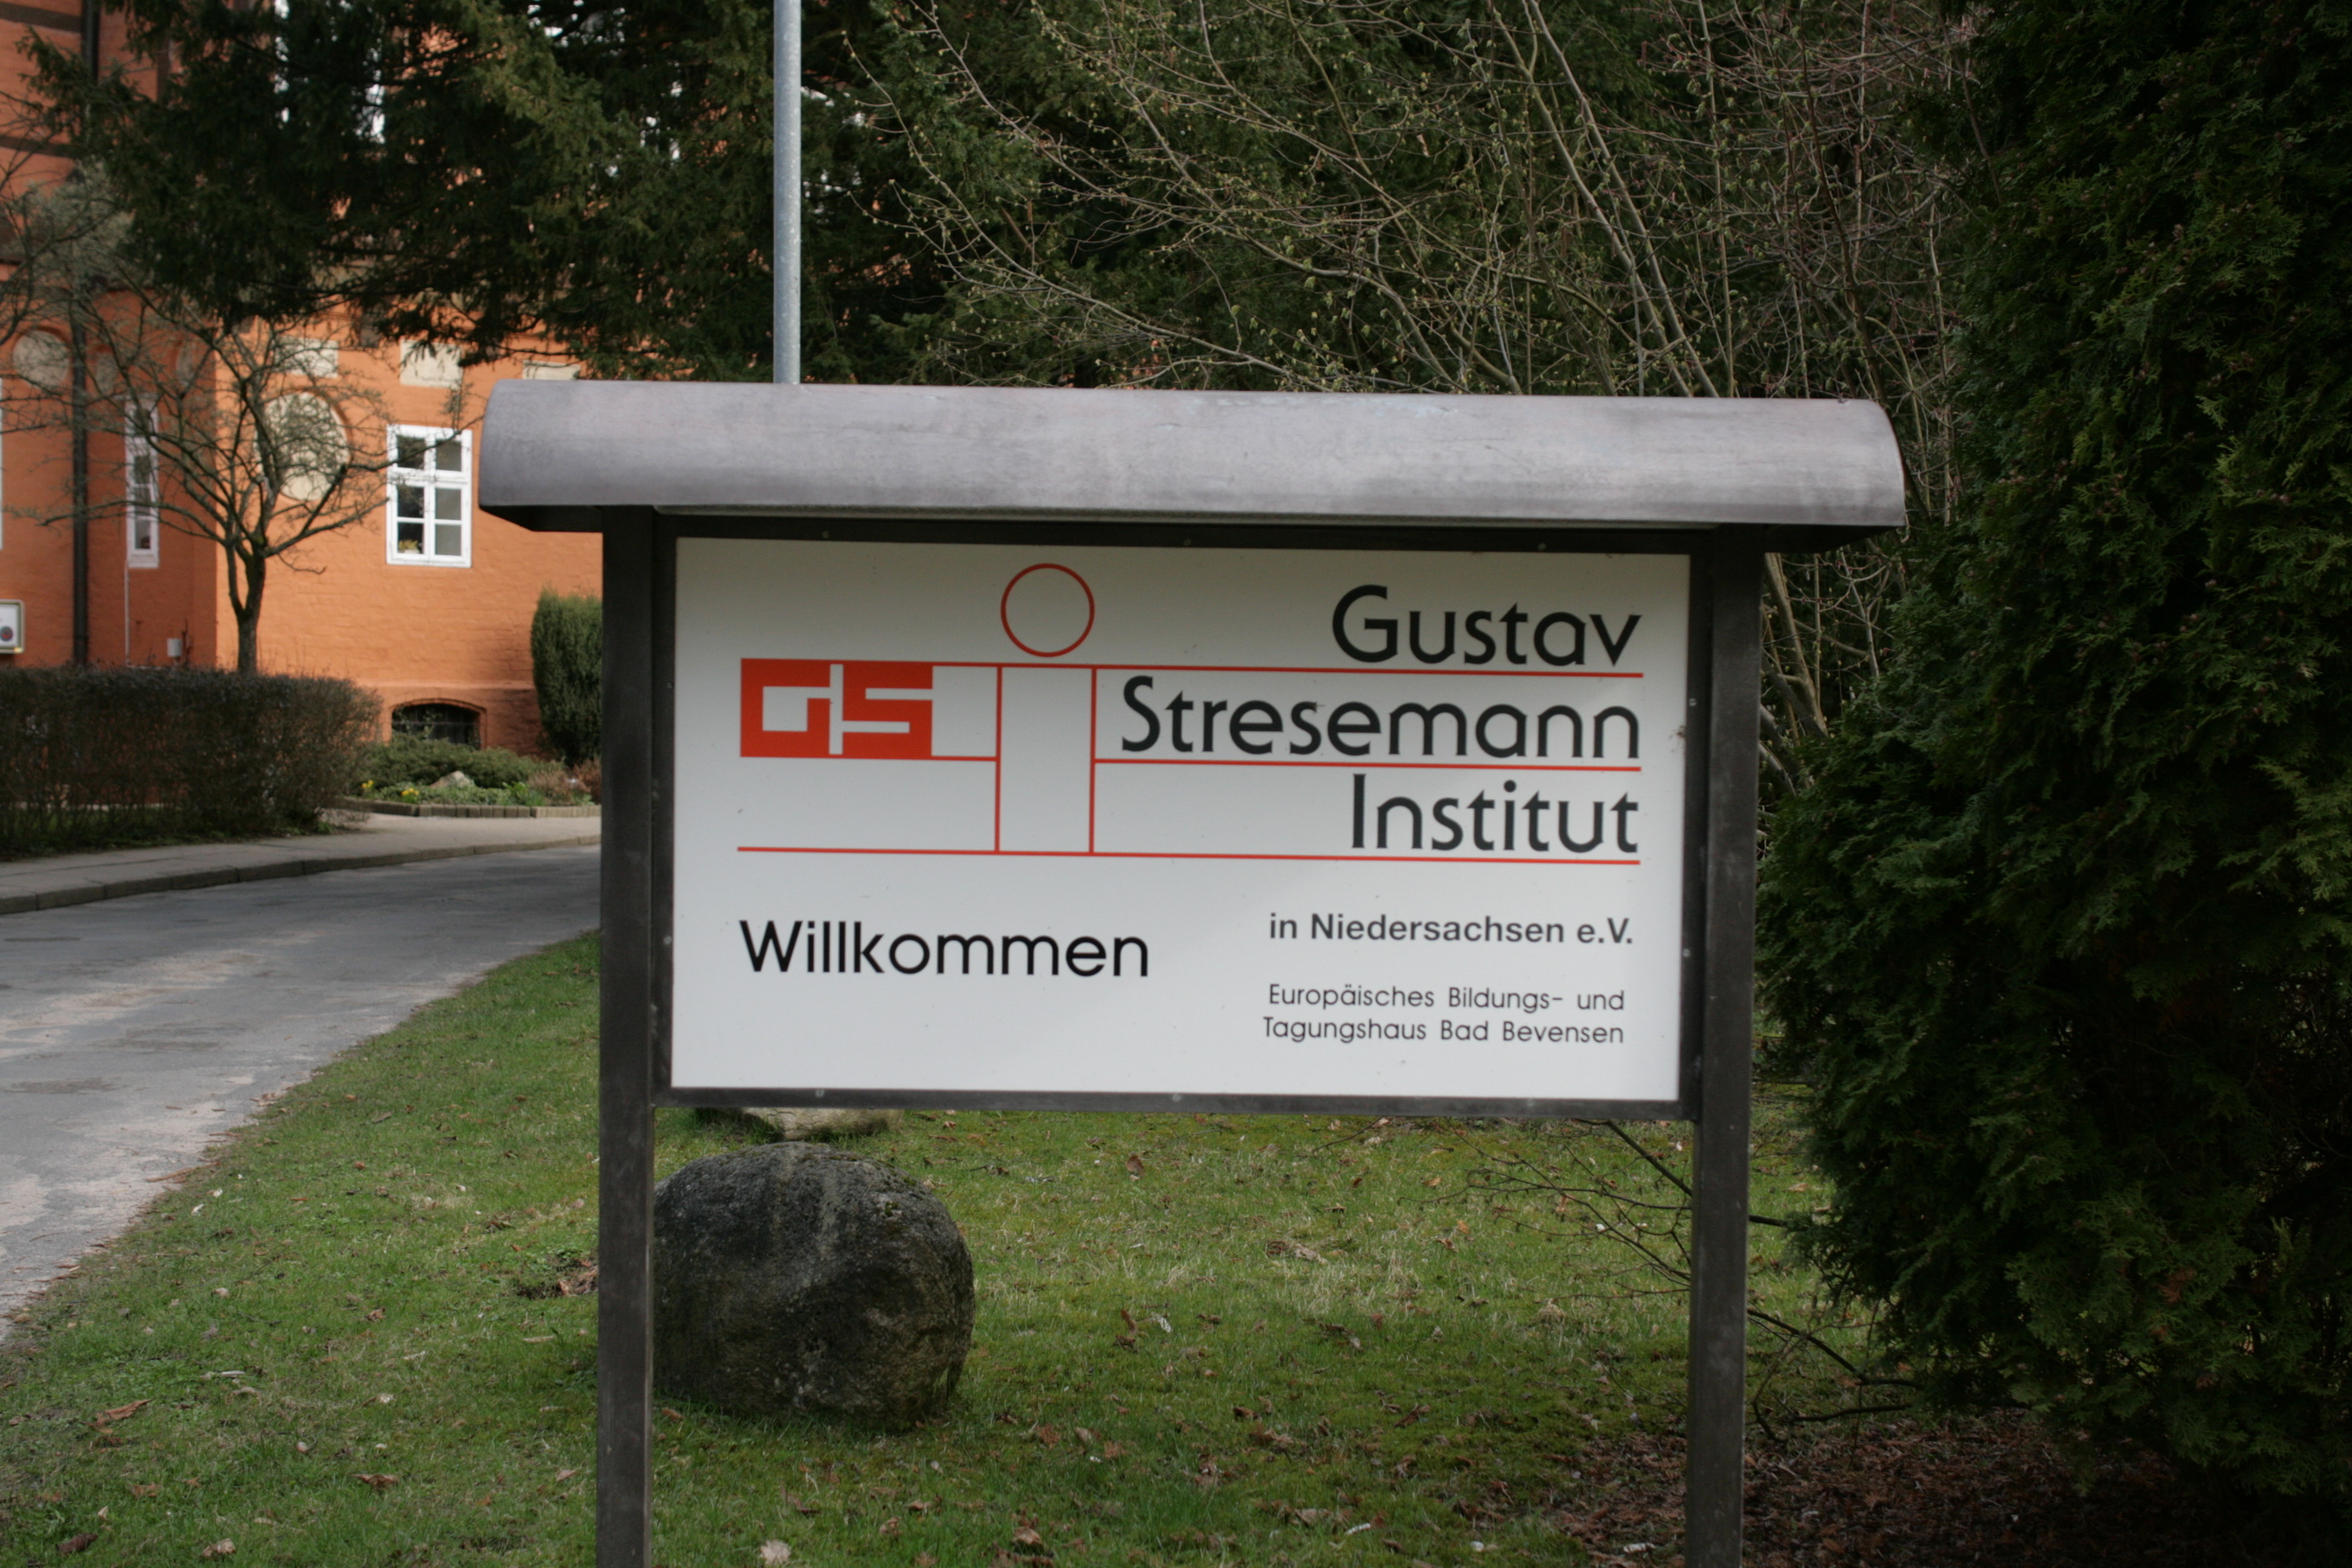 Gustav Stresemann Institut Bad Bevensen.